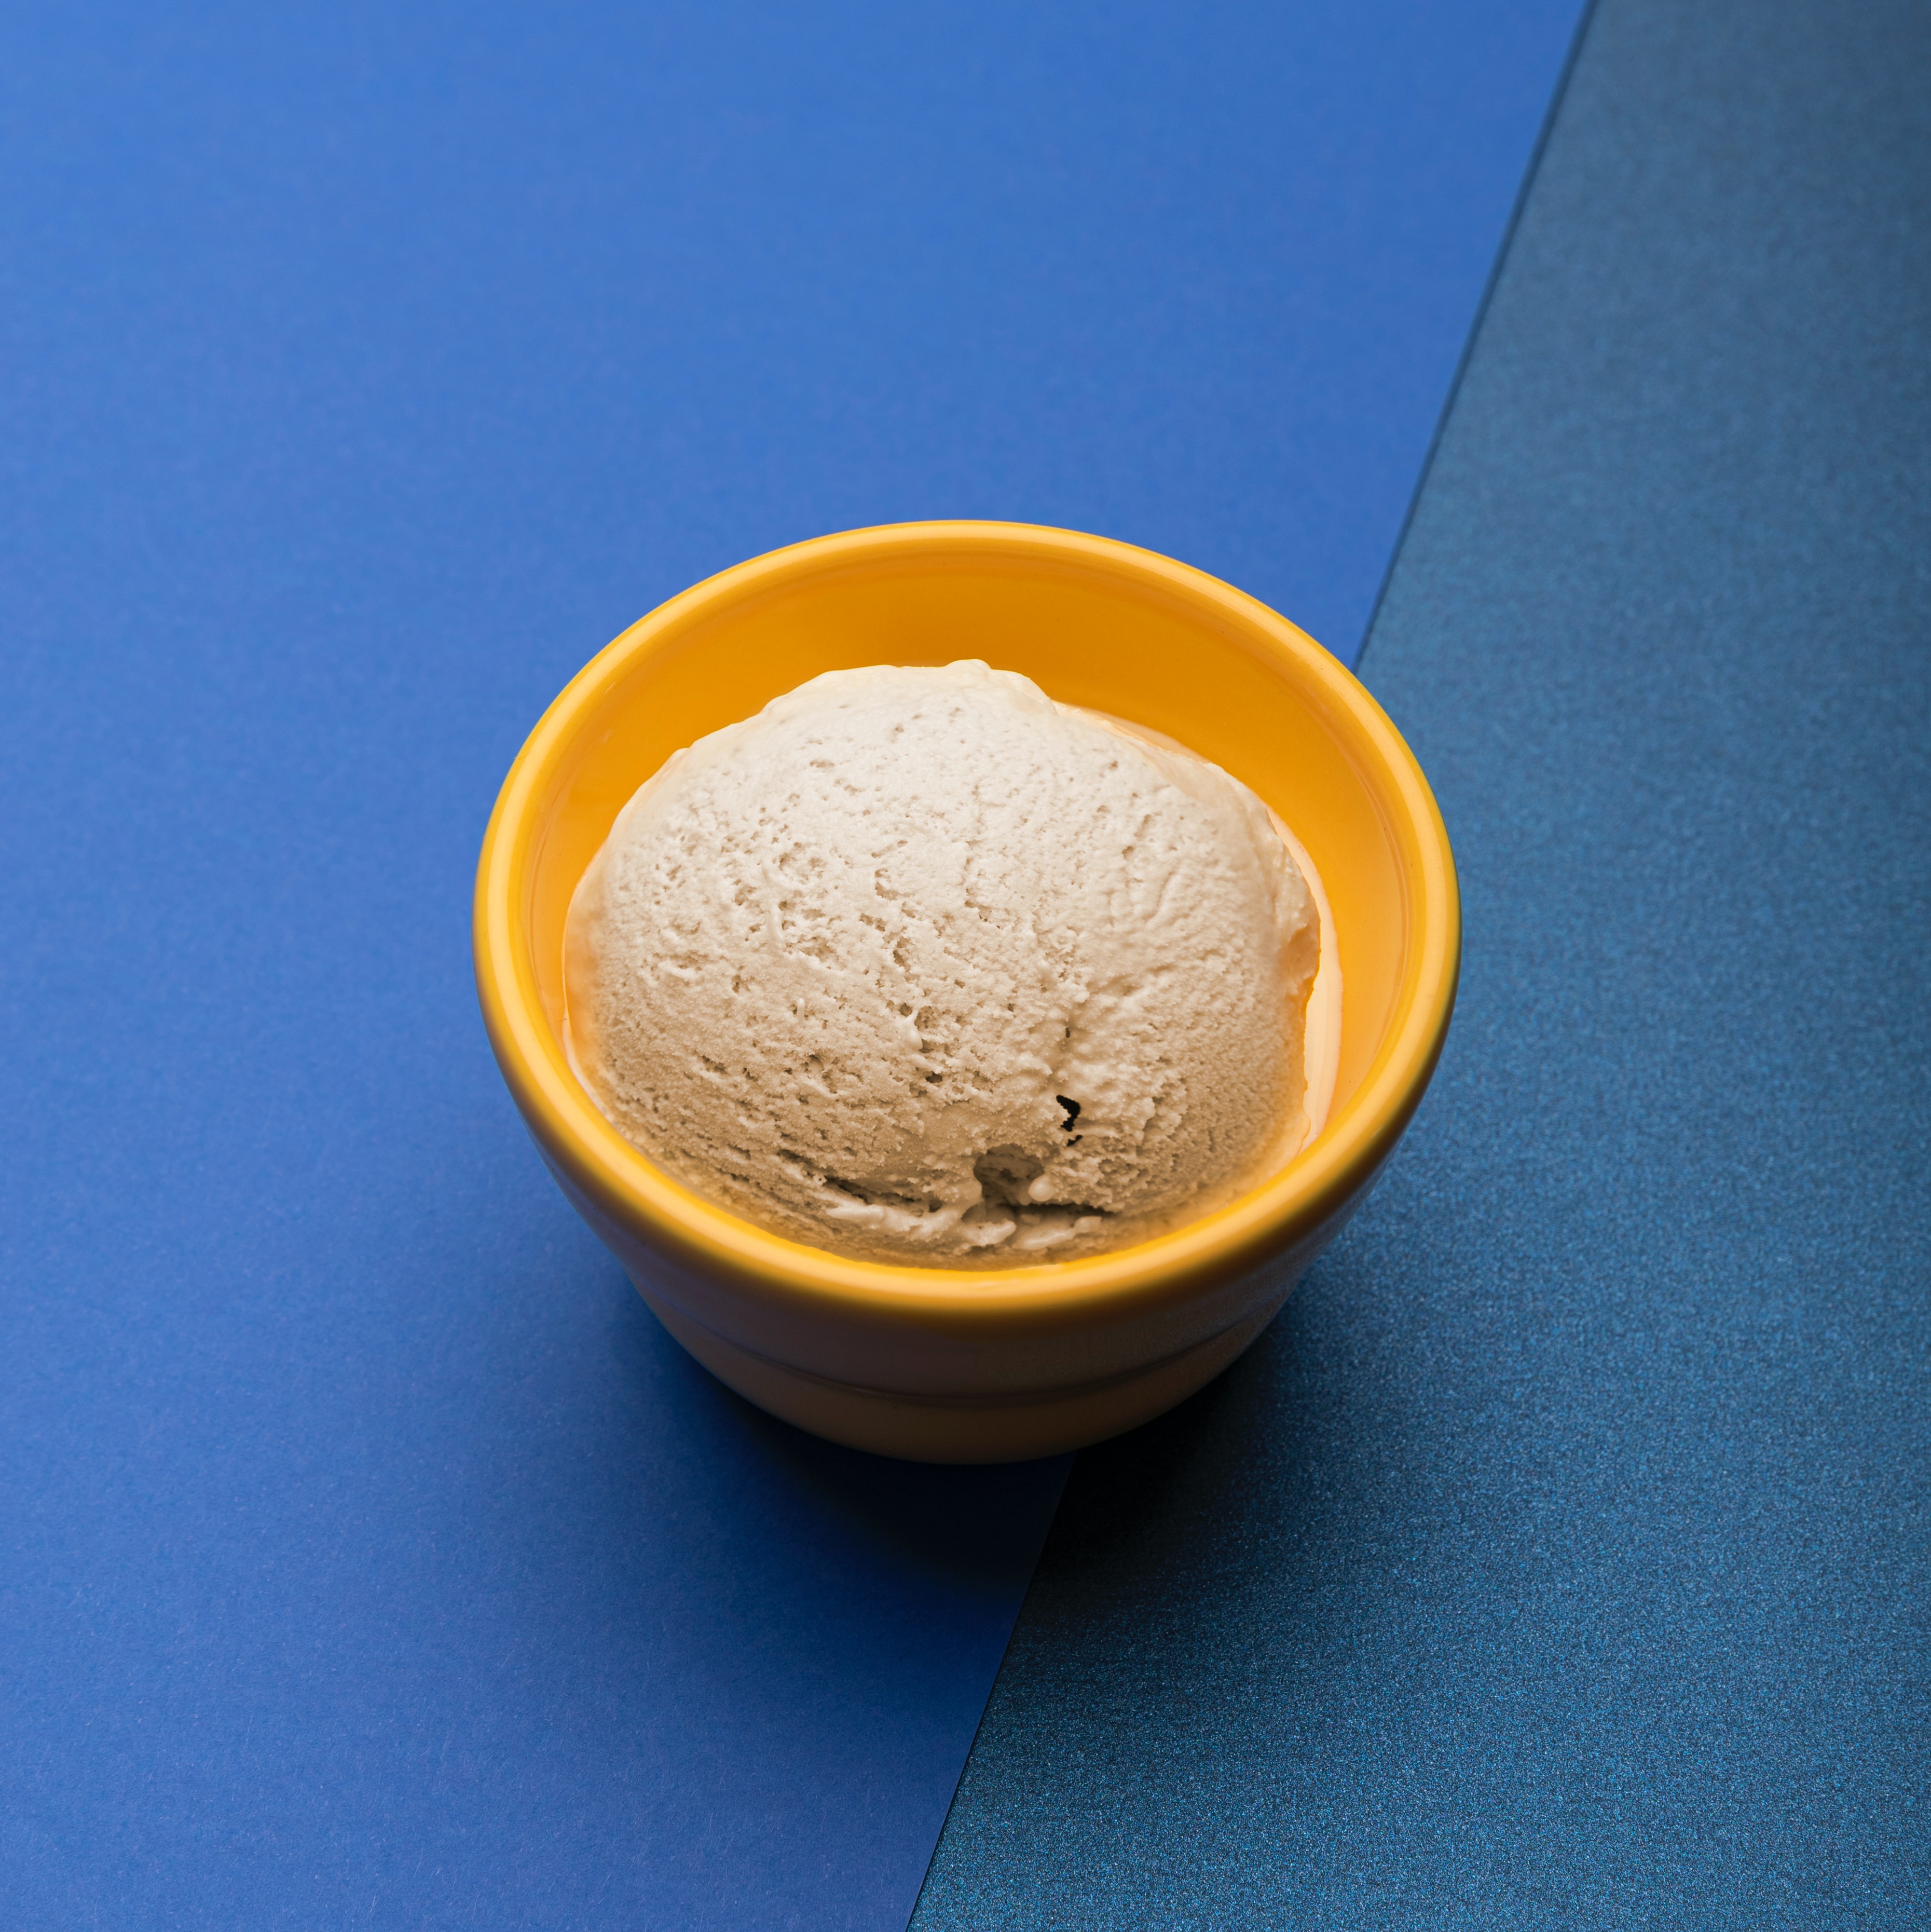 ice-cream image